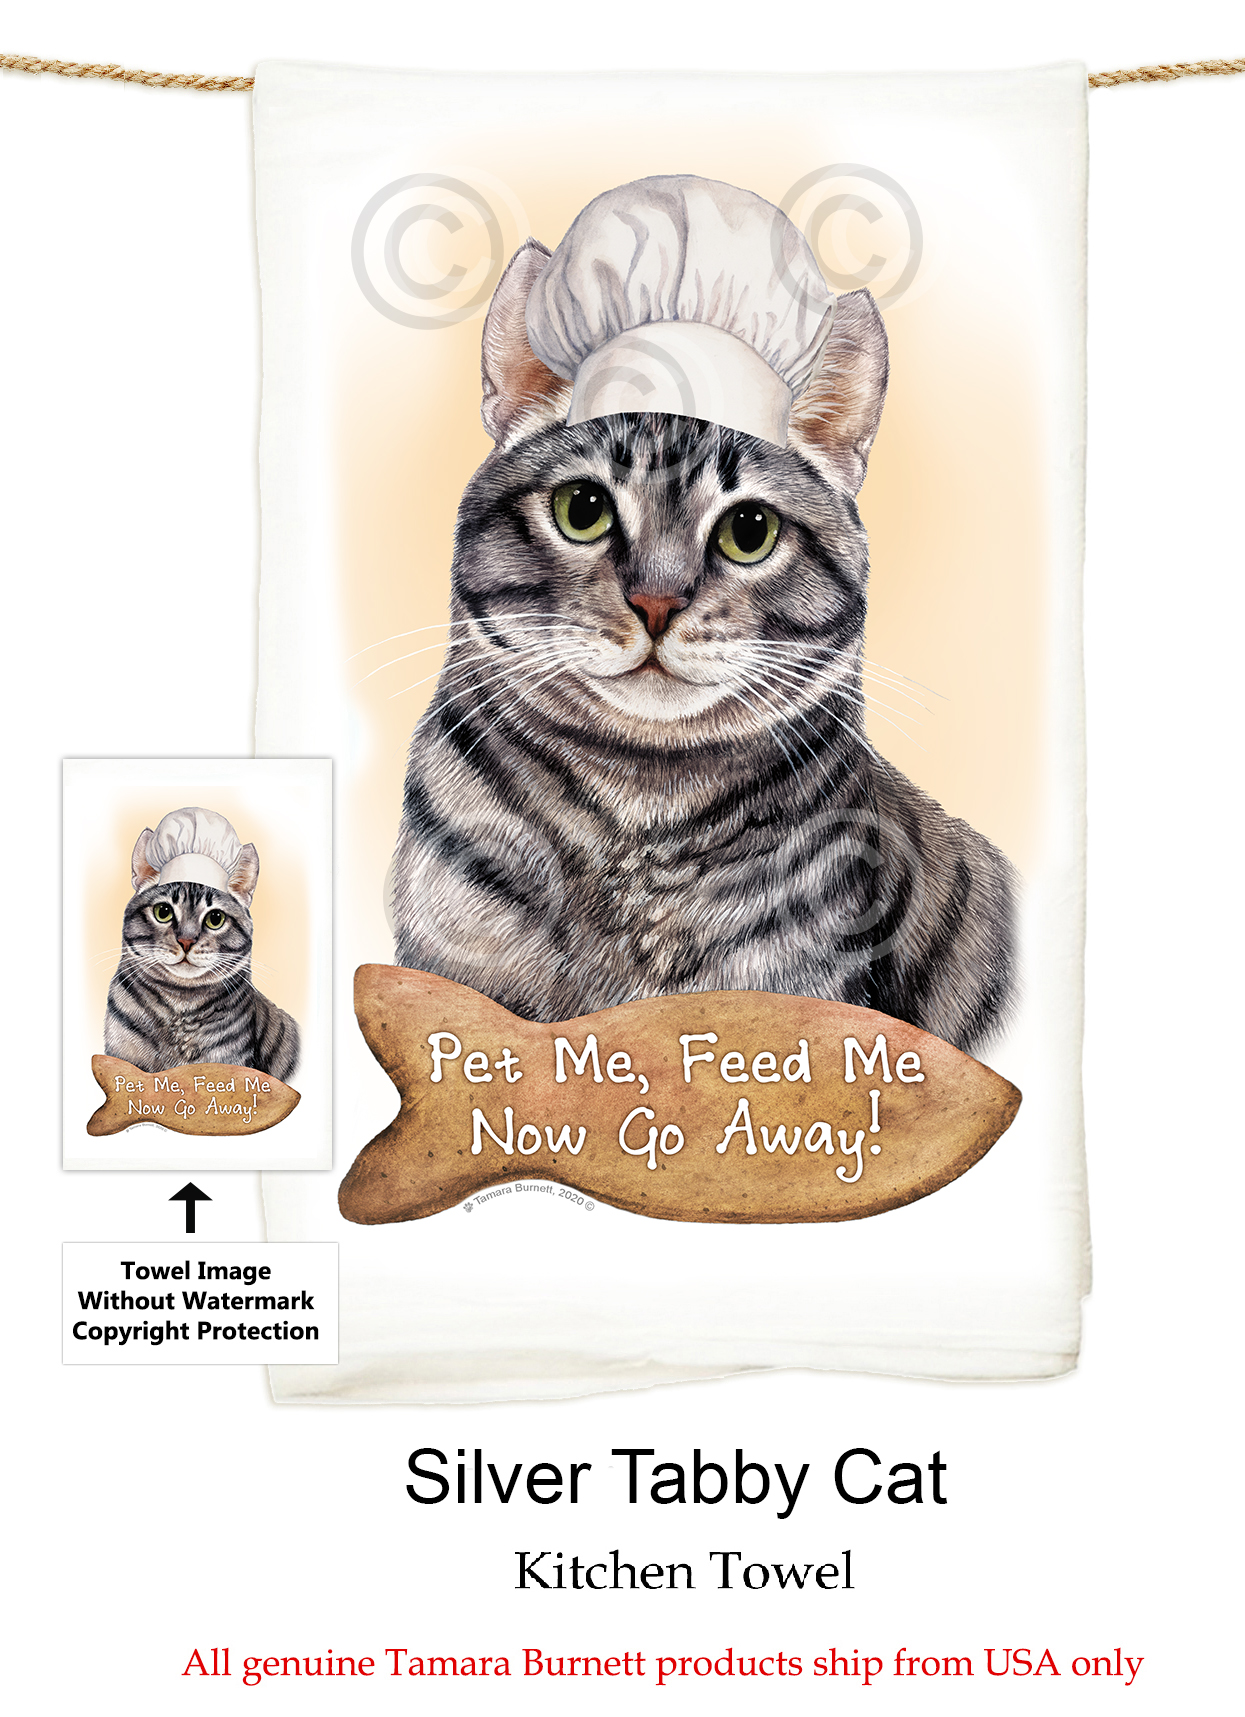 Silver Tabby Cat - Flour Sack Towel Image